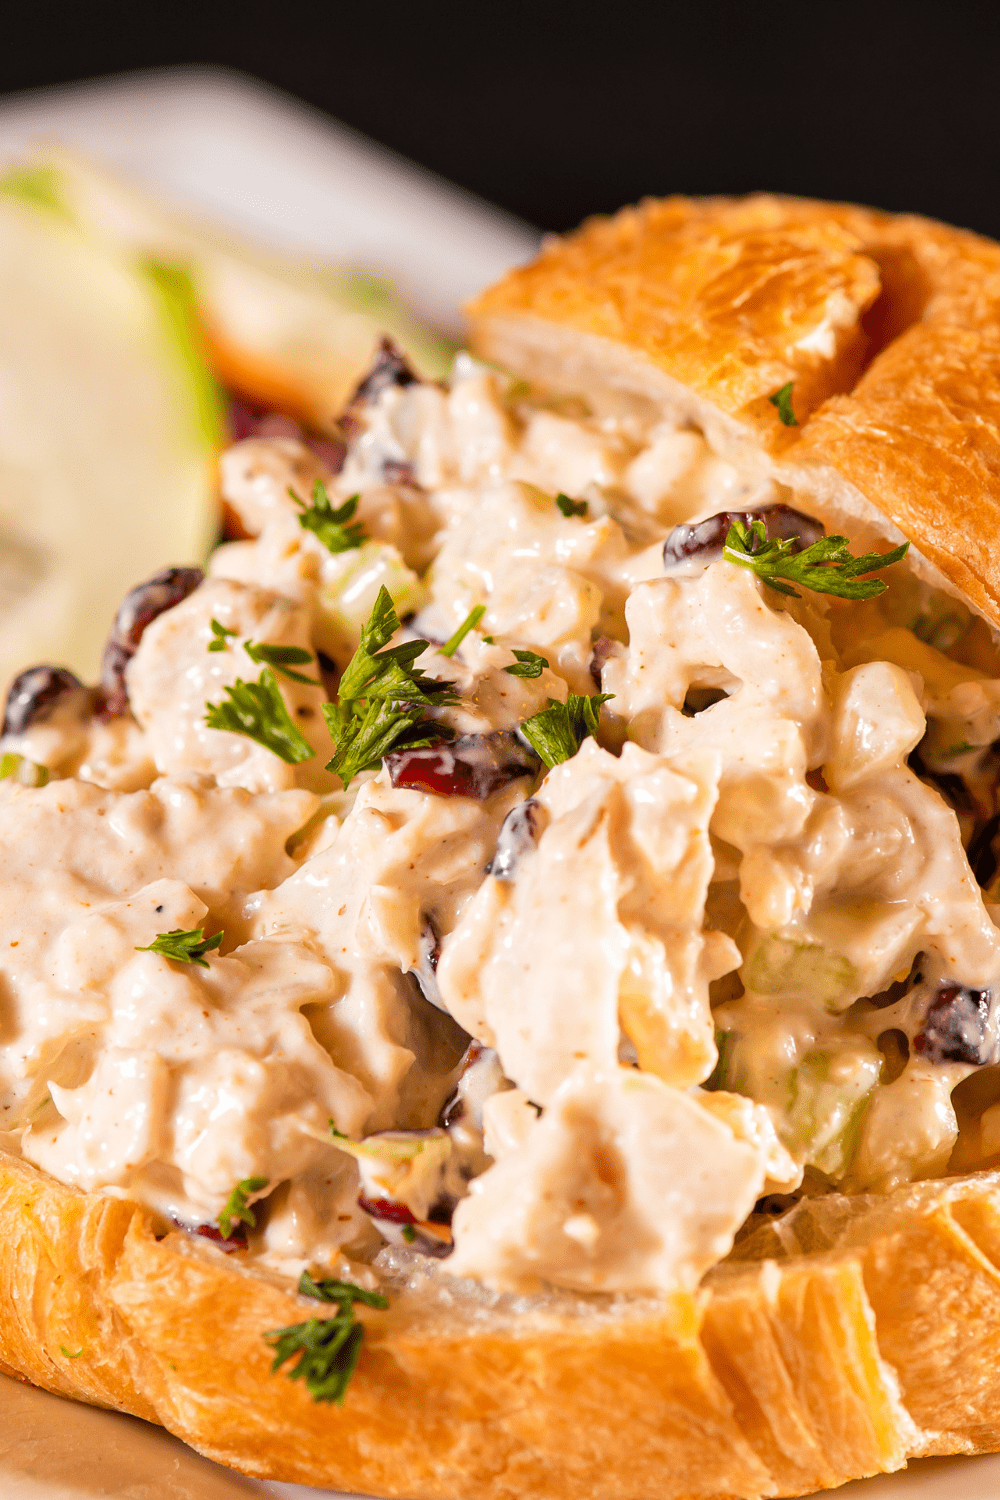 Easy Potluck Recipes -Waldorf Chicken Salad on Croissant